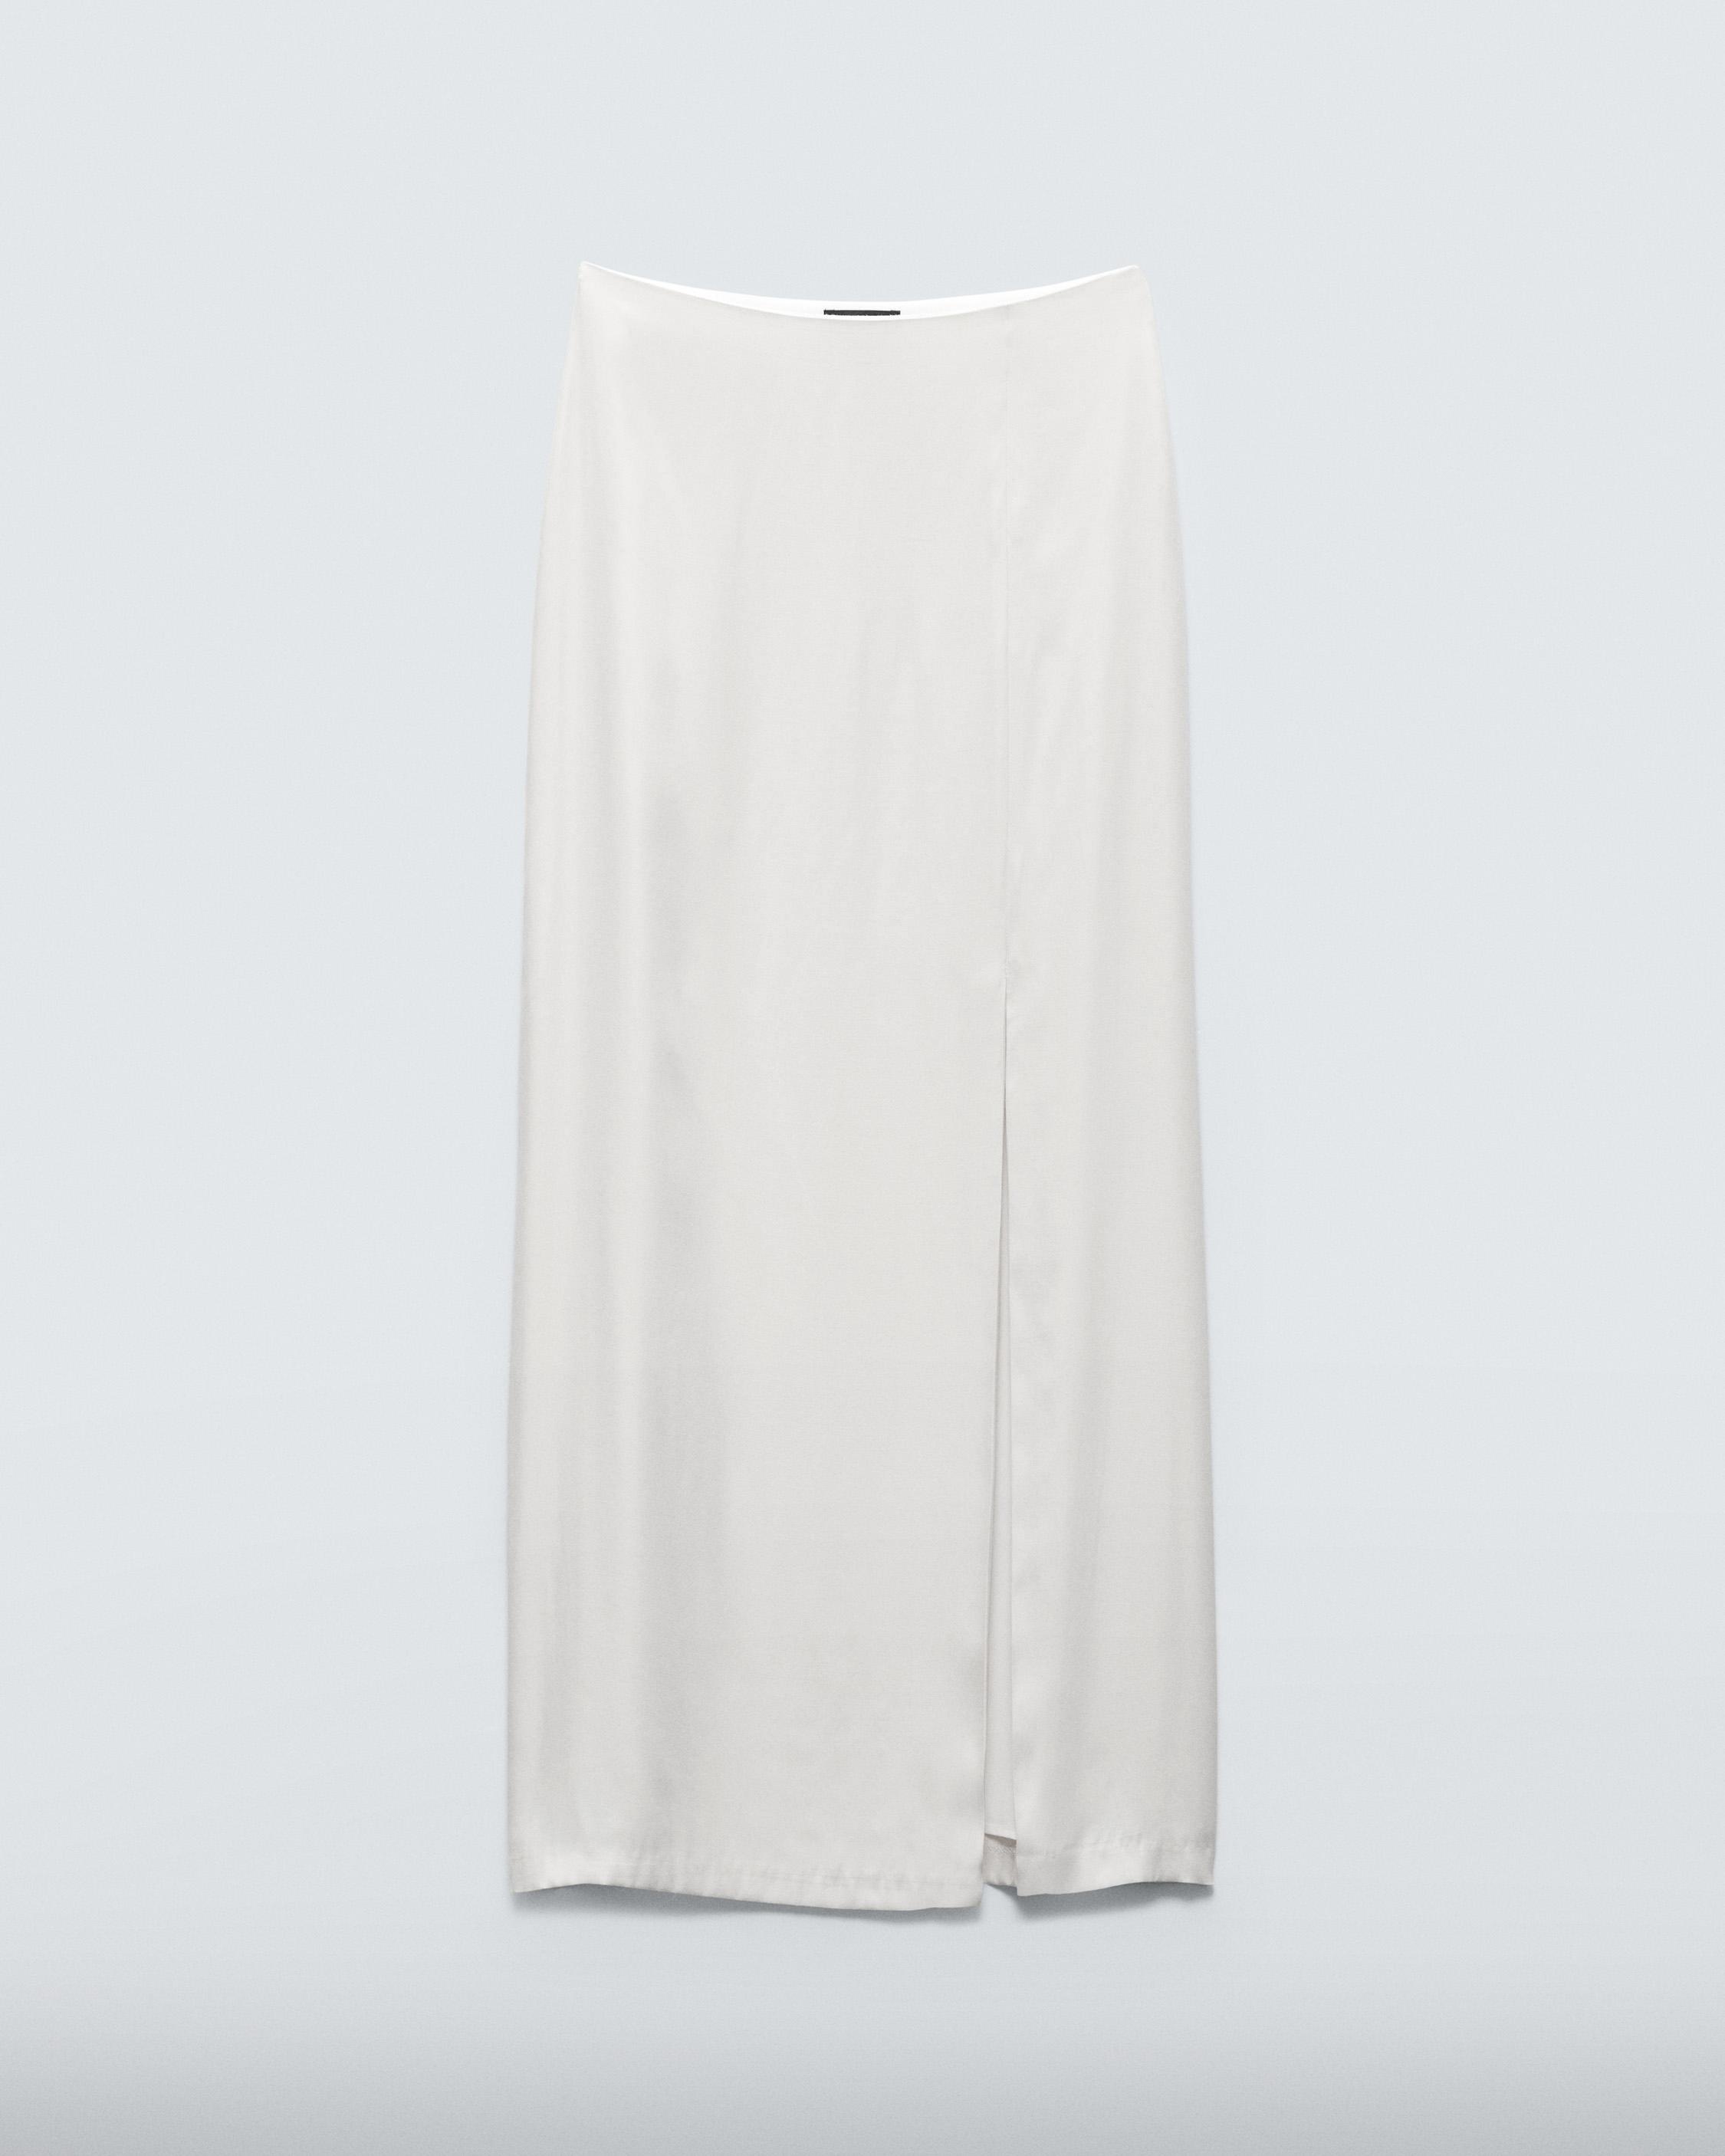 Ilana Silk Skirt
Maxi - 1